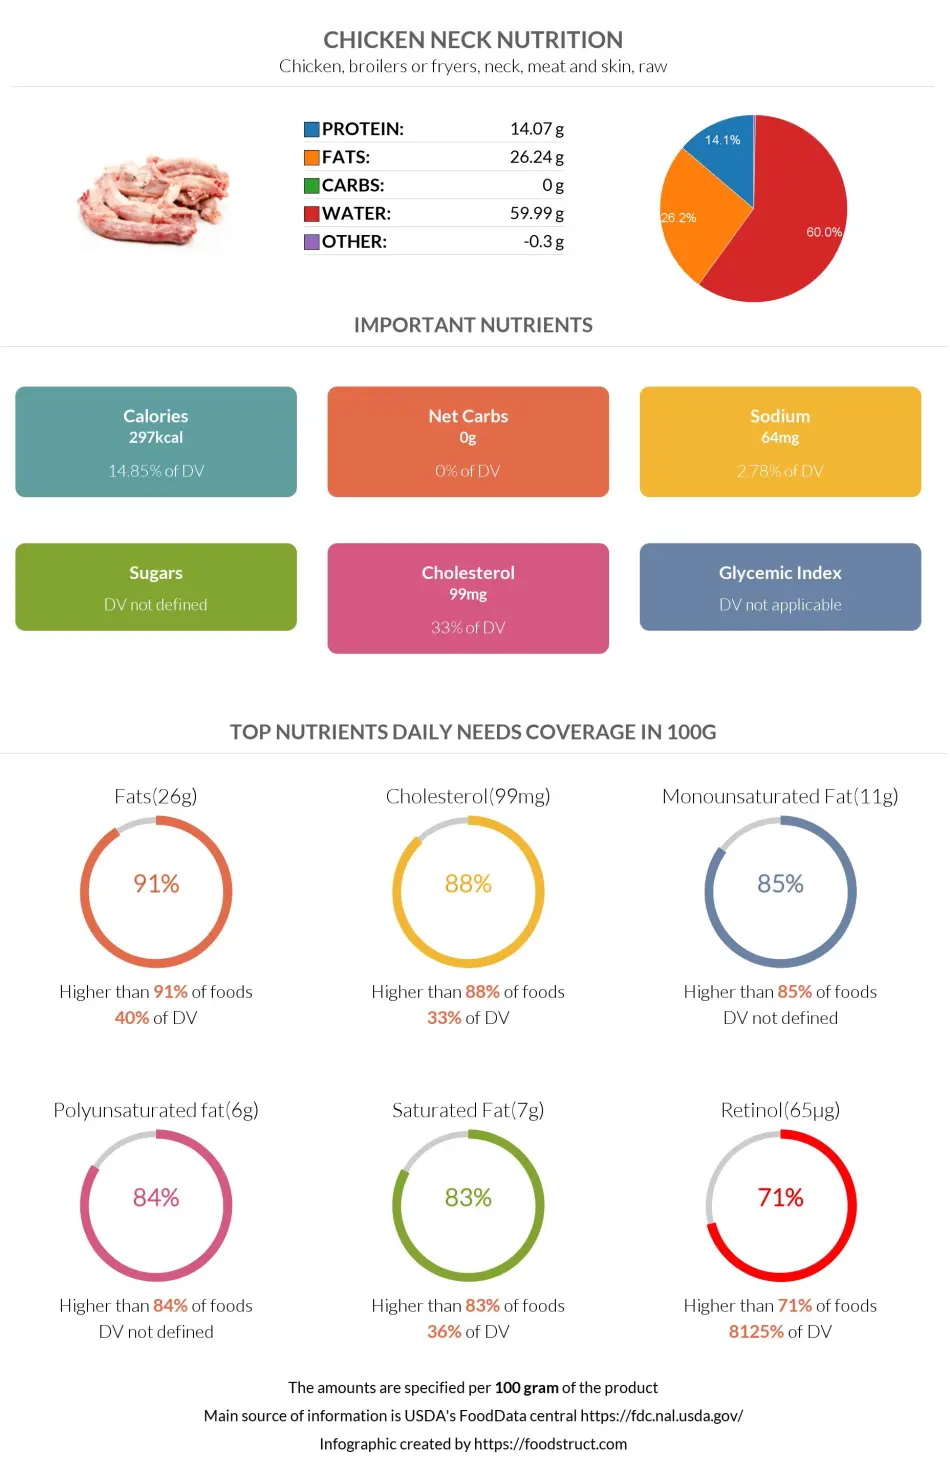 Chicken neck nutrition infographic